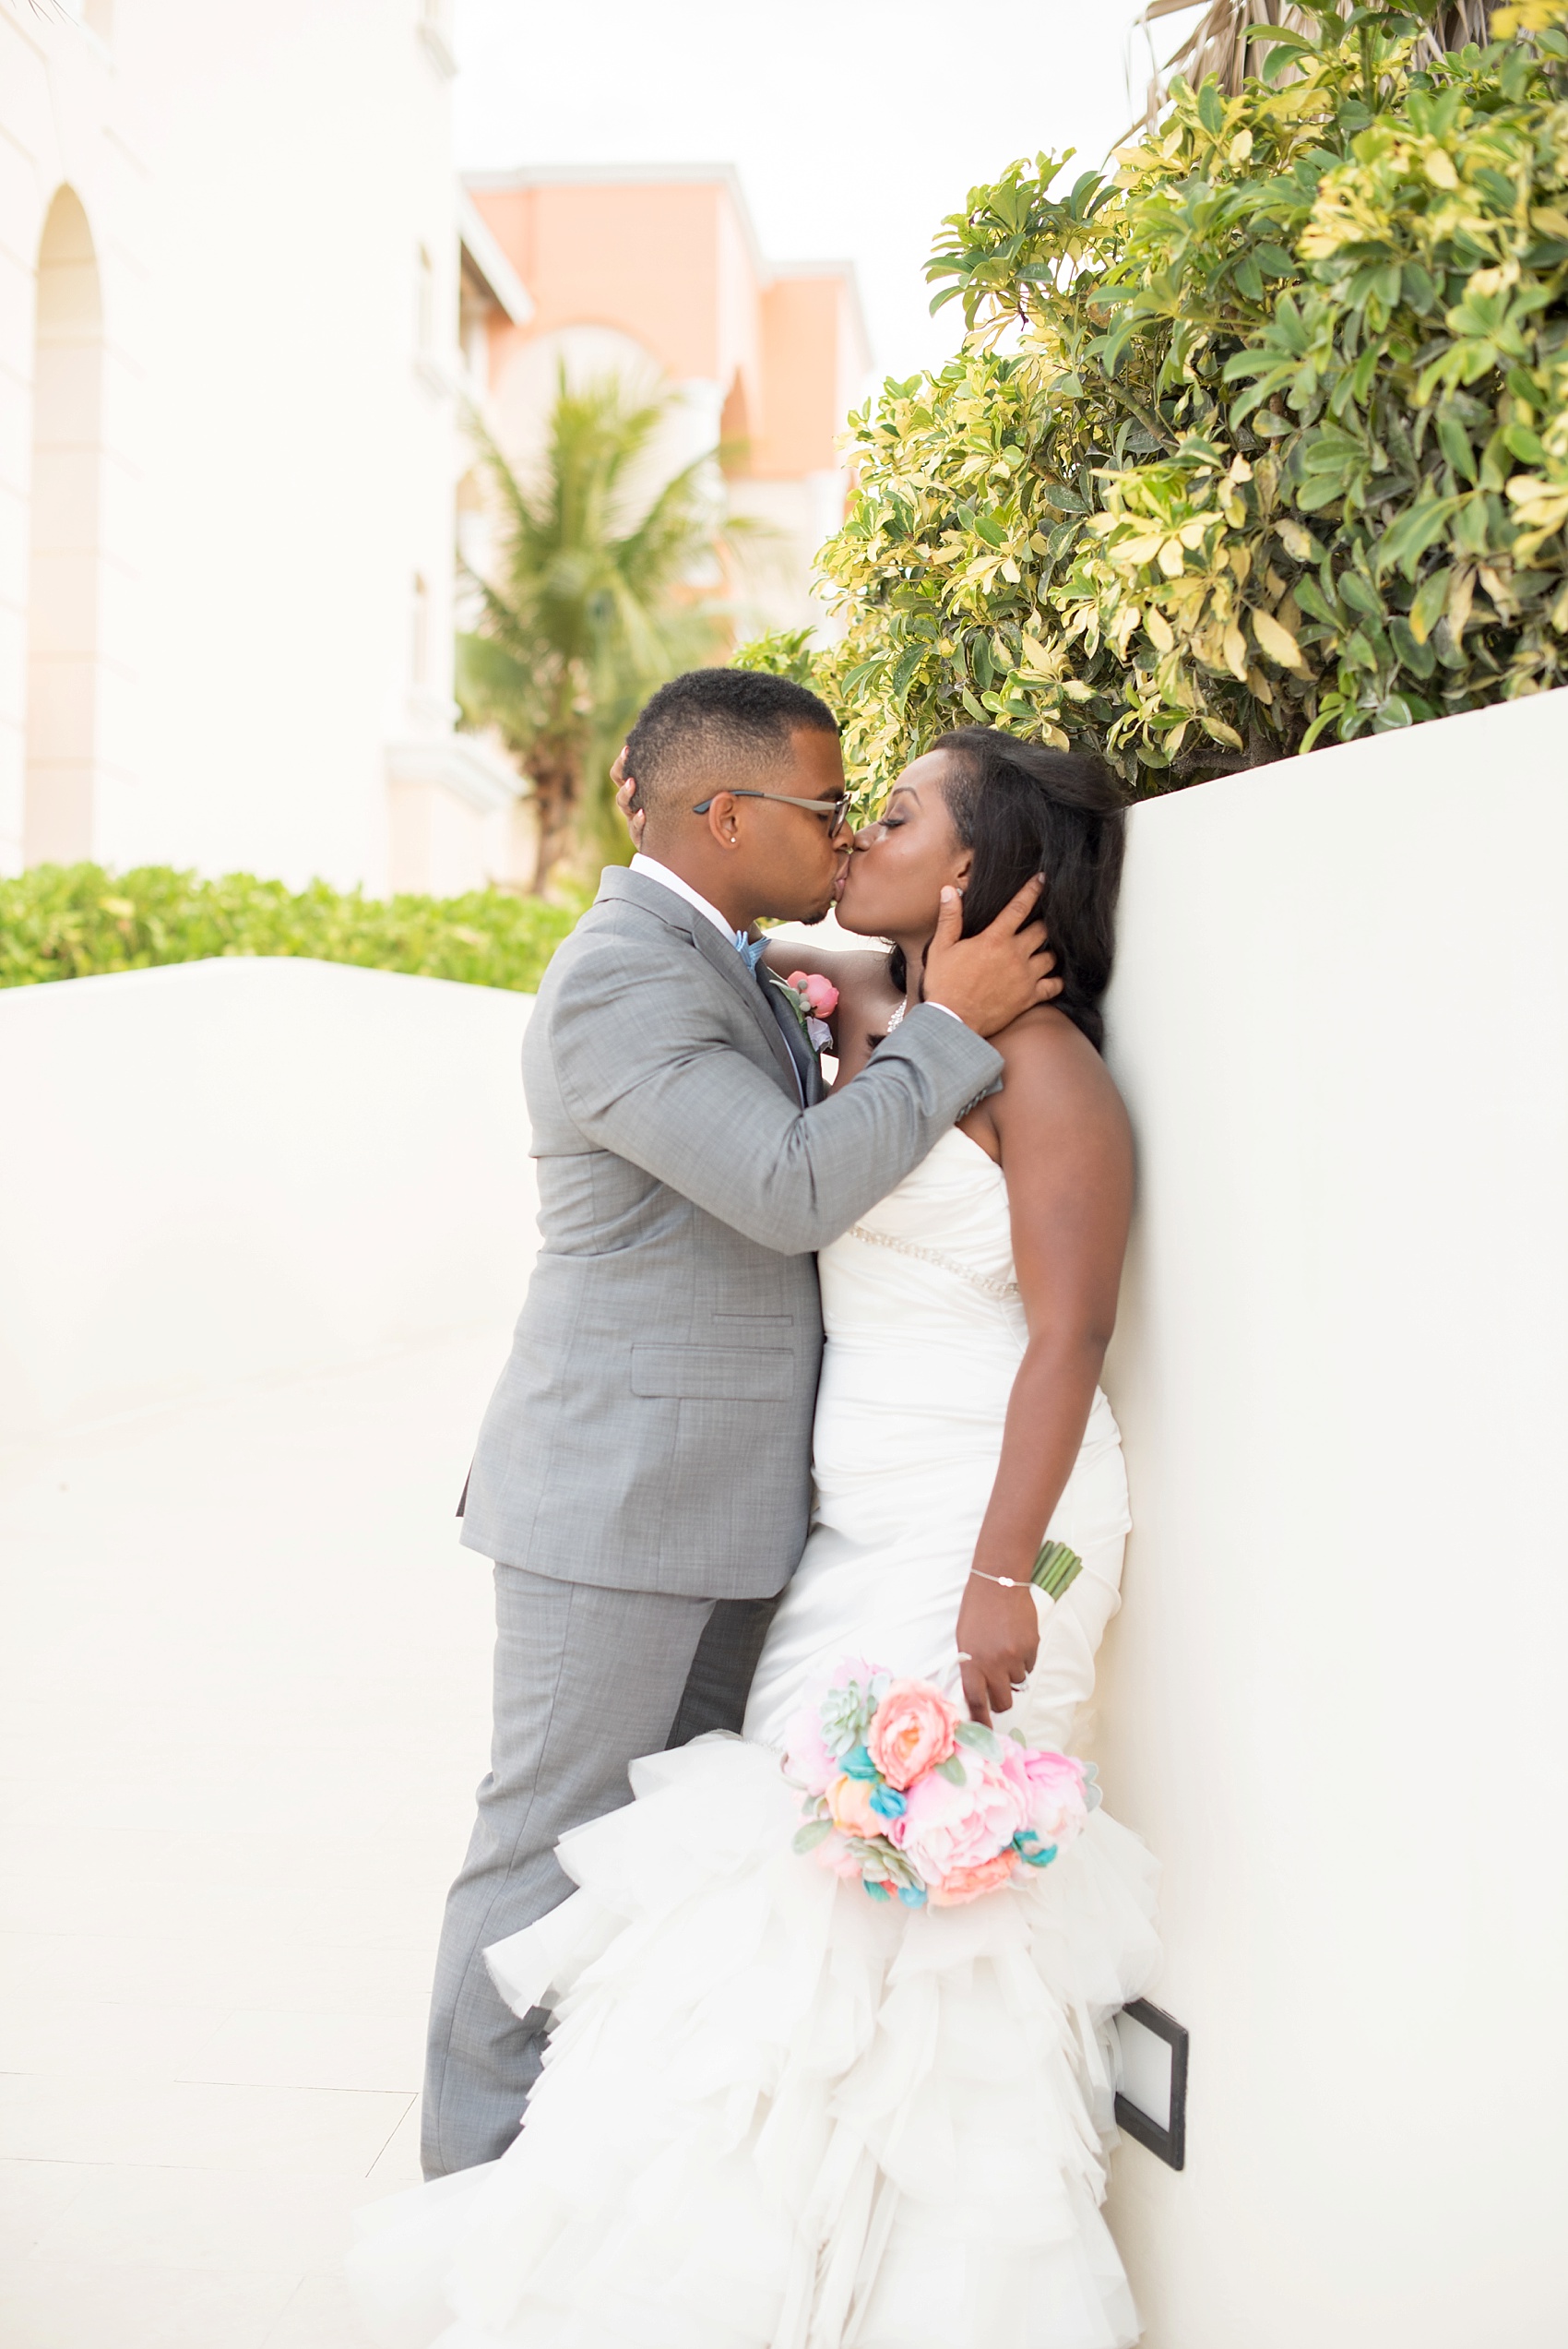 Iberostar Jamaica wedding photos, bride and groom. Images by Mikkel Paige Photography.